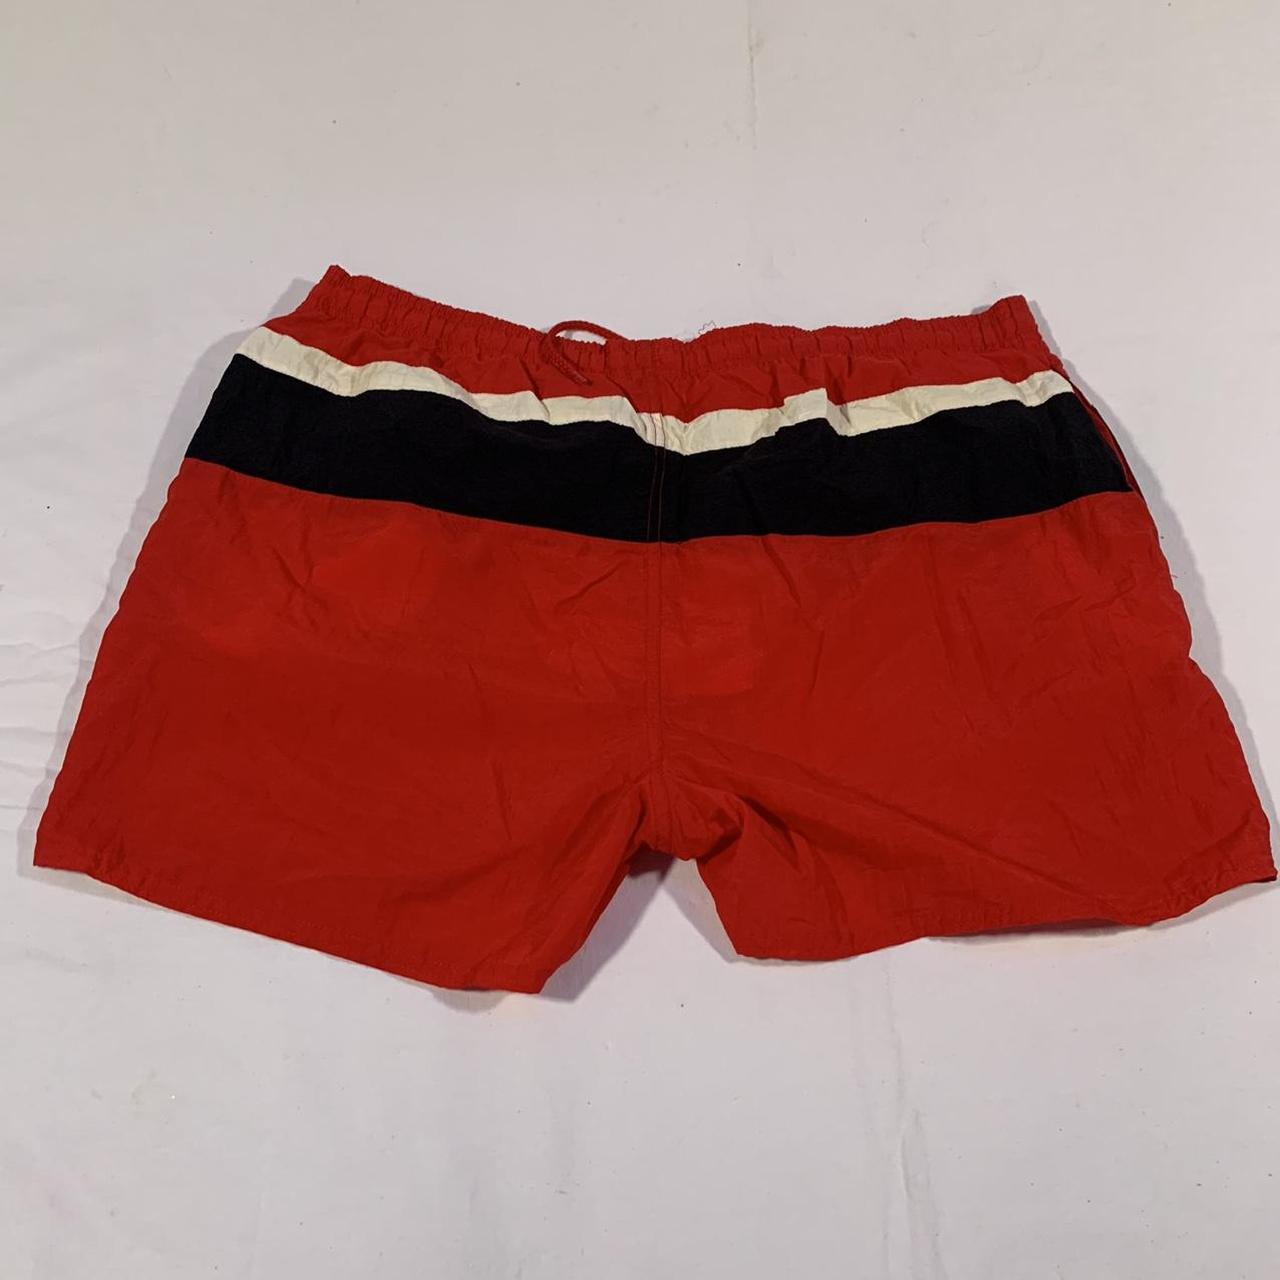 Product Image 2 - red black white shorts /